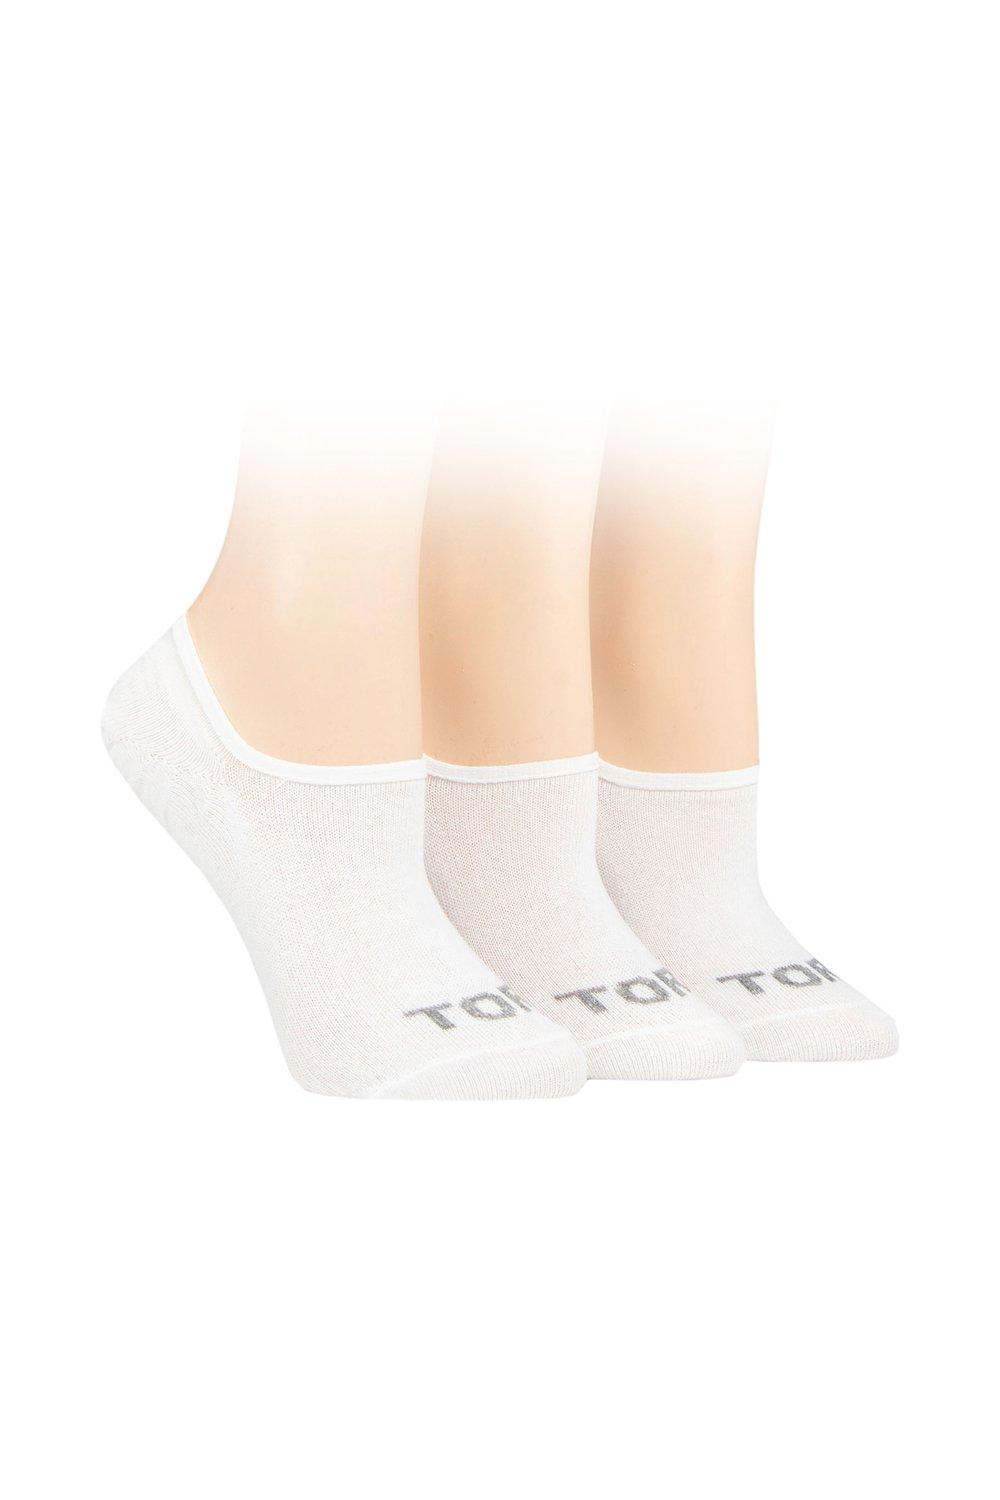 3 Pair 100% Recycled Plain Cotton High Cut Ped Socks